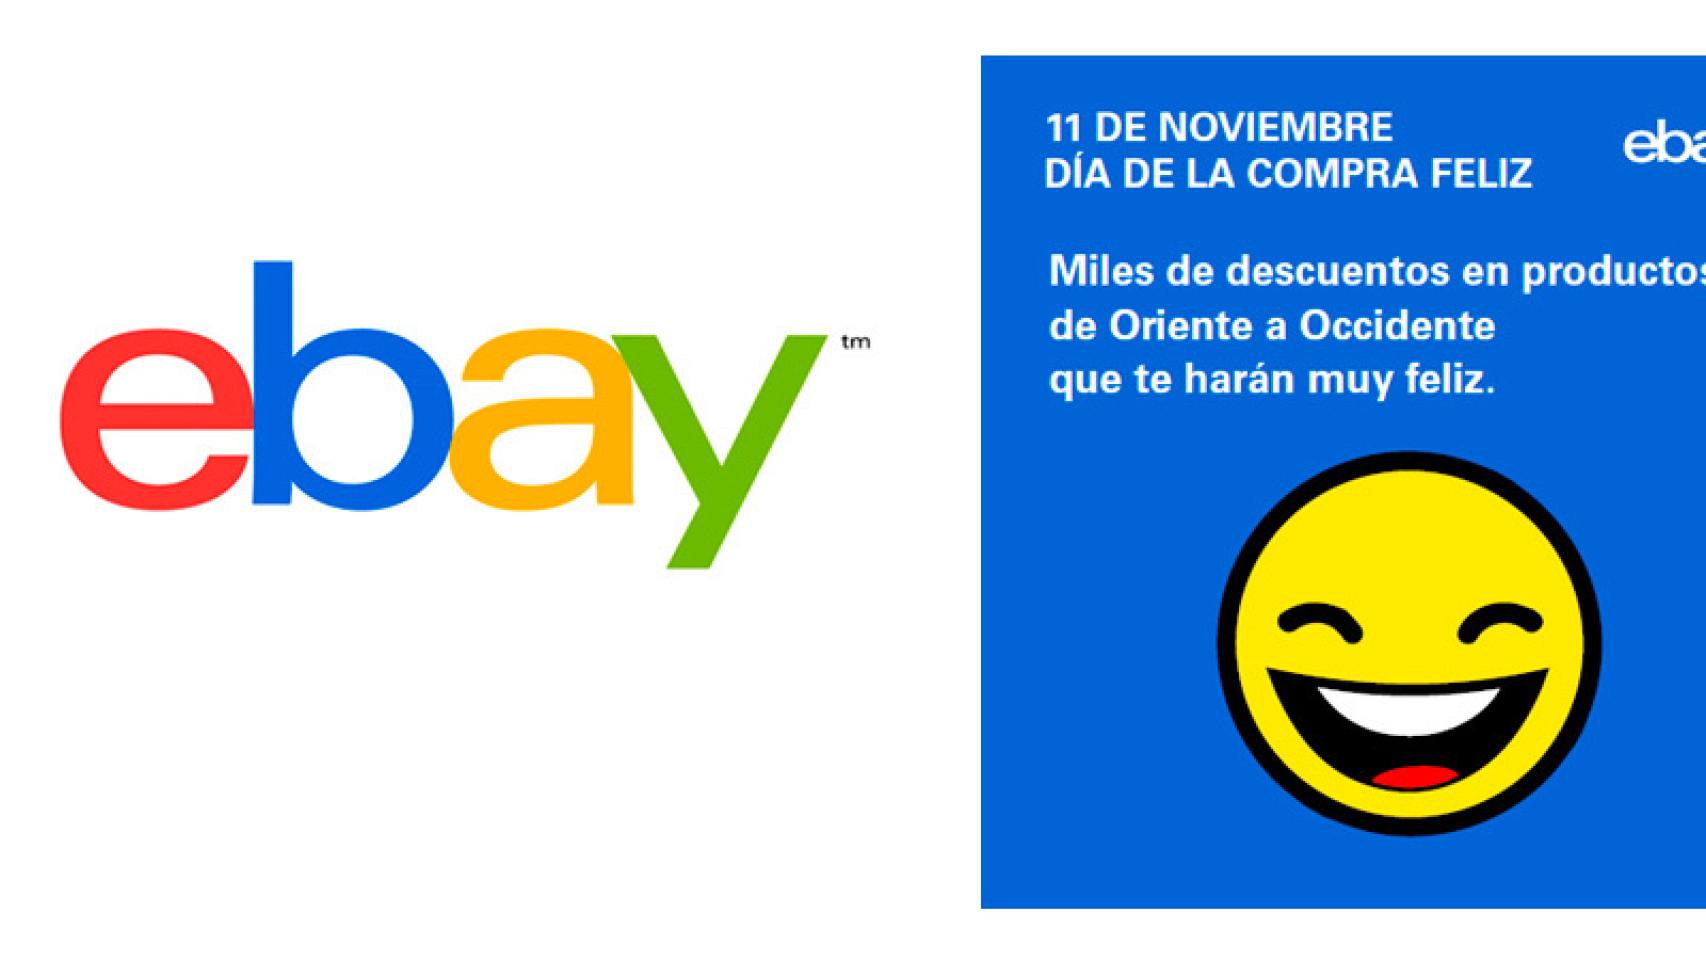 ebay-compra-feliz-dia